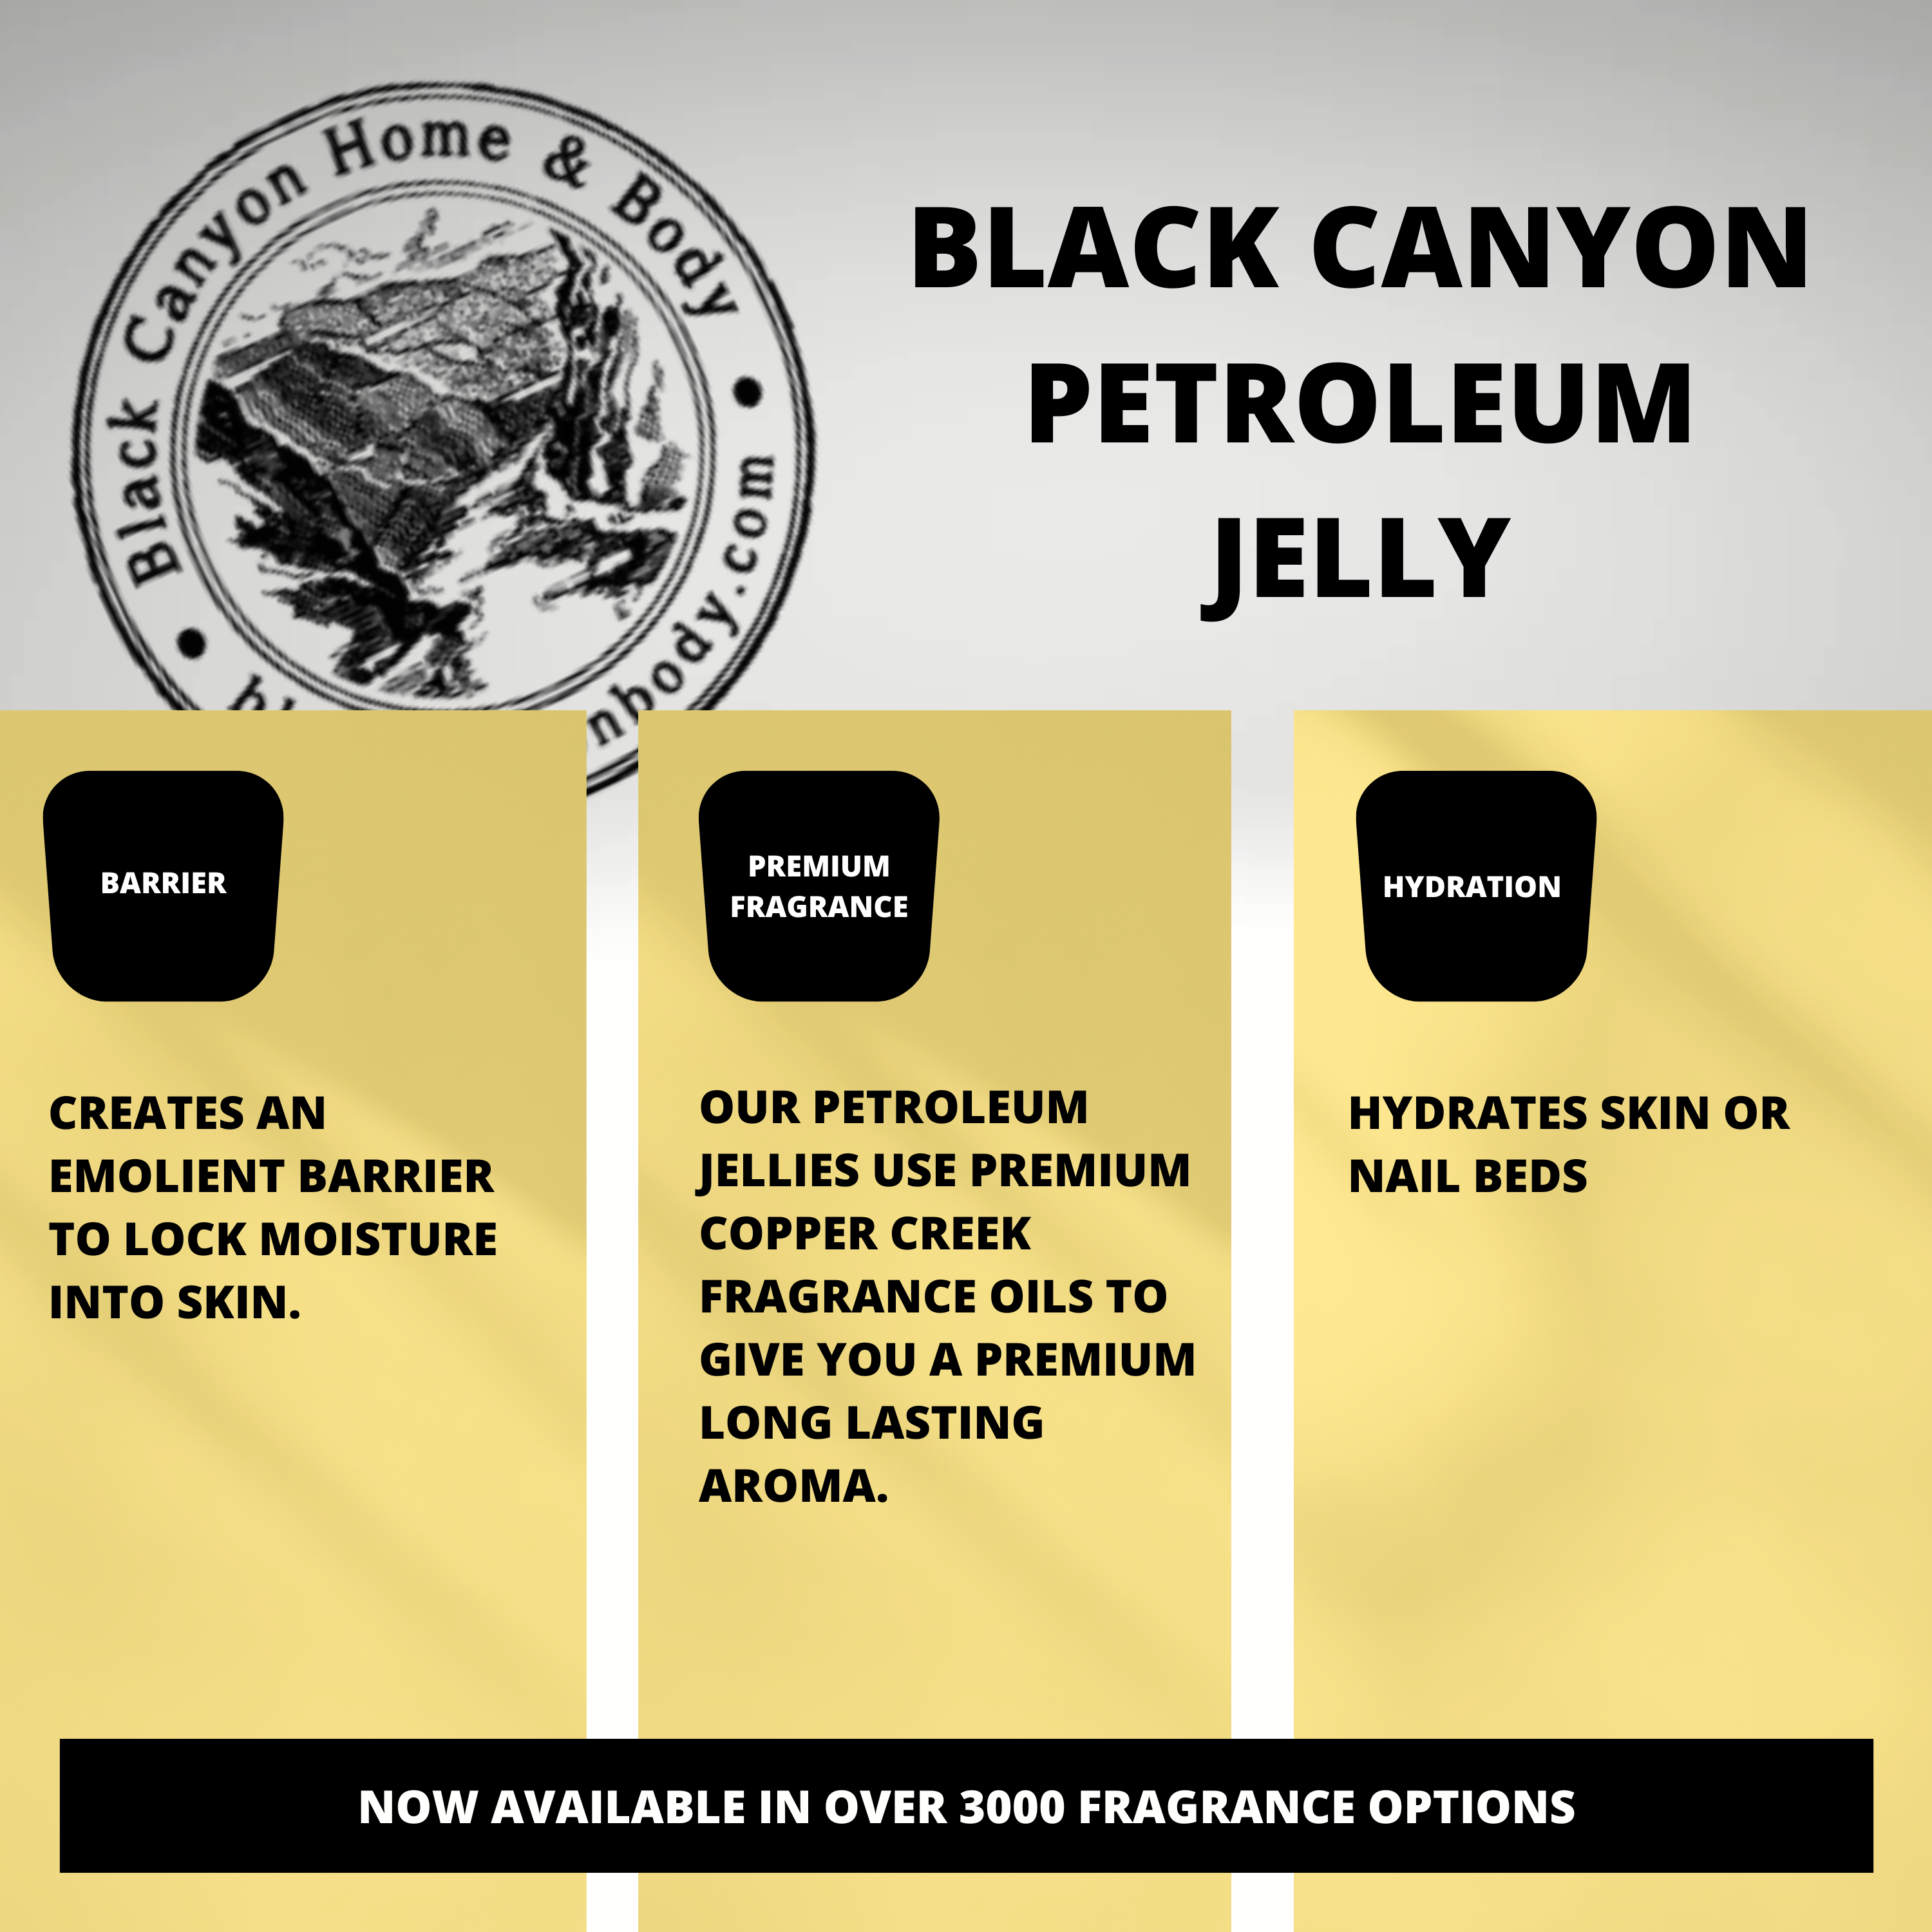 Black Canyon Black Raspberry Vanilla Scented Petroleum Jelly